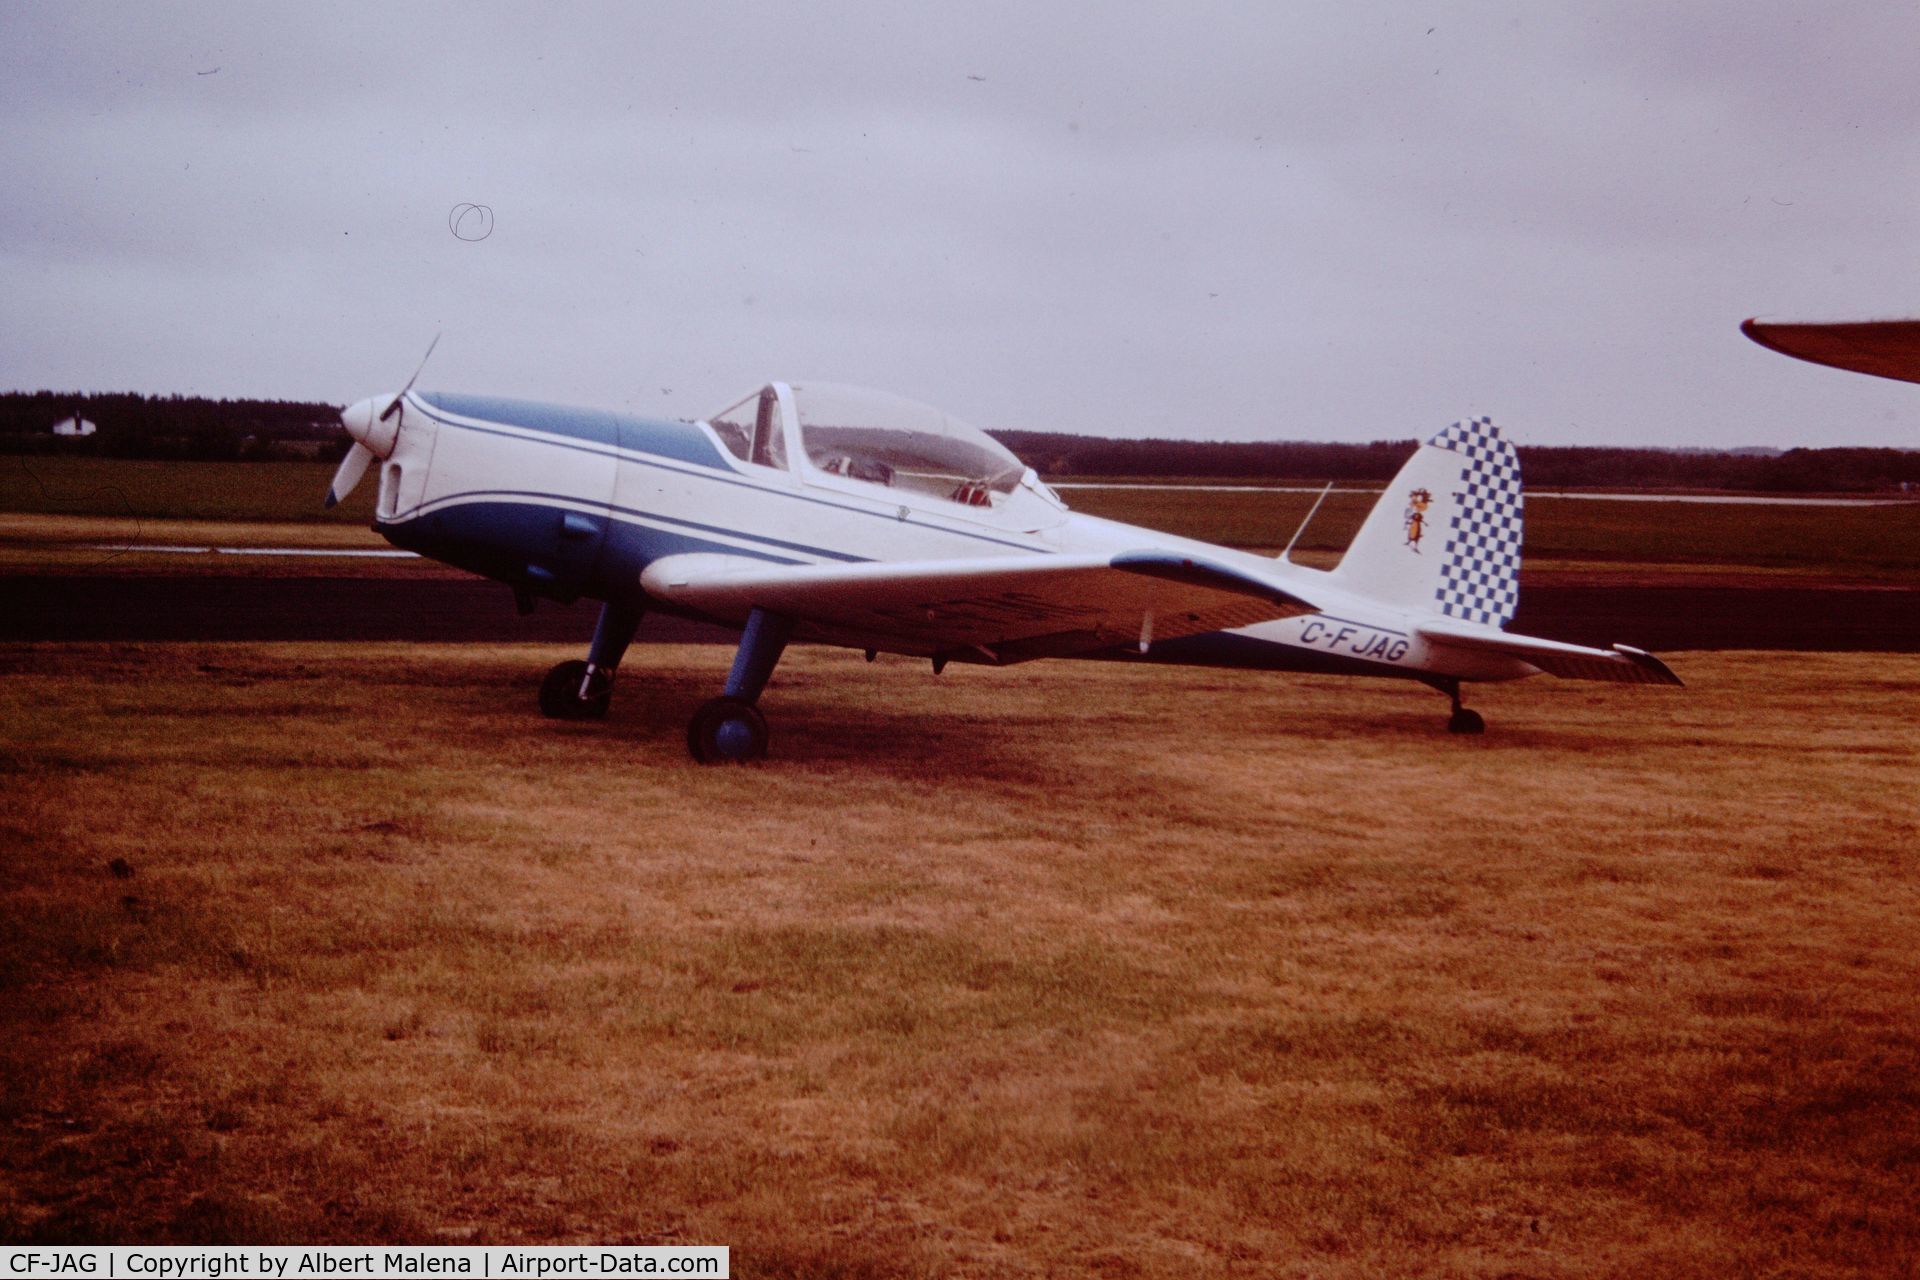 CF-JAG, 1956 De Havilland Canada DHC-1B-2-S5 Chipmunk Mk2 C/N 189-227, Probably taken in the late 50's - Prince Albert, Saskatchewan airport